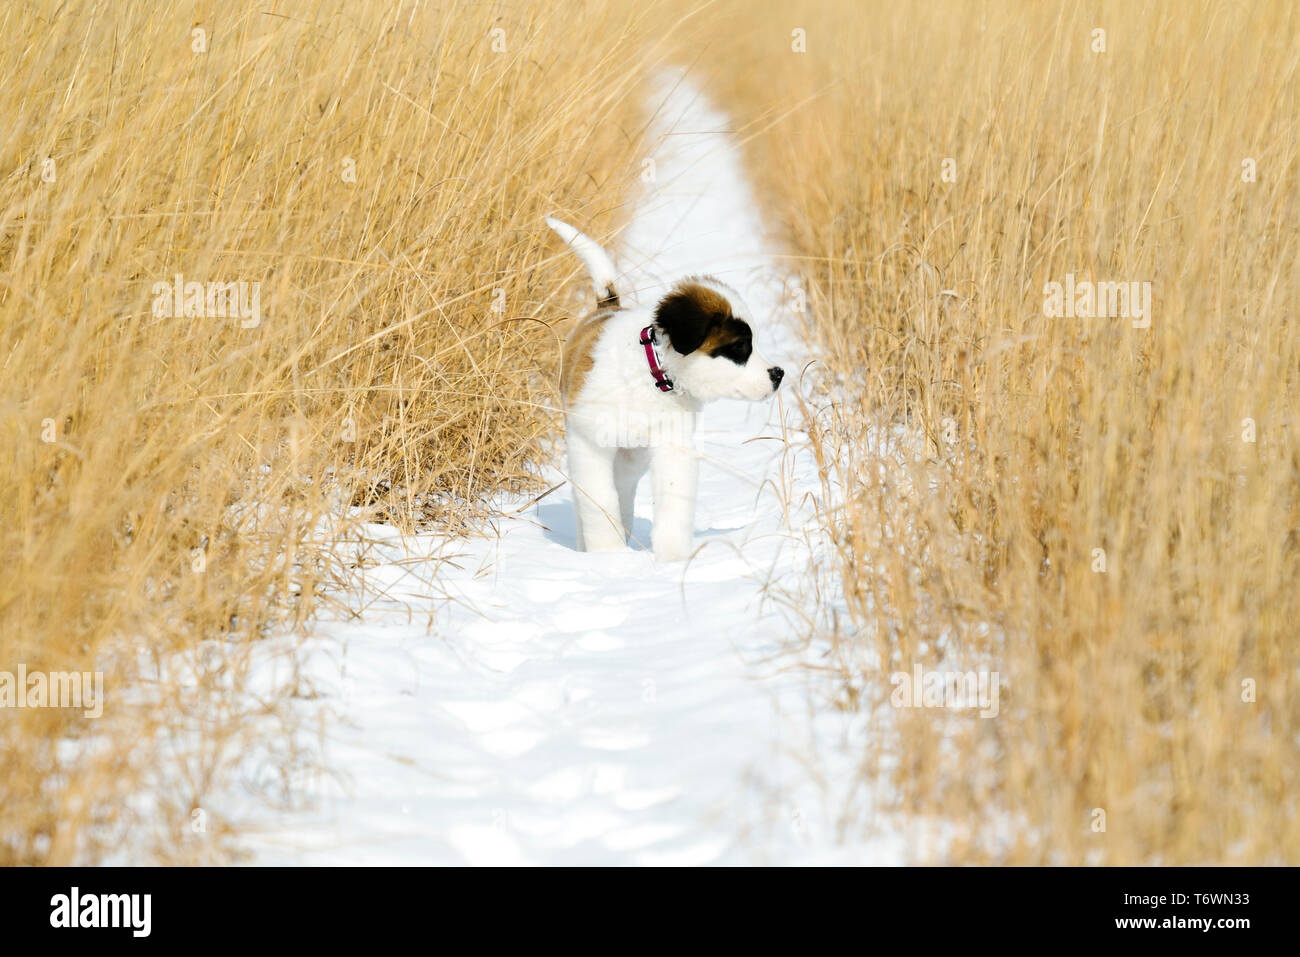 A Saint Bernard puppy standing in a snowy field Stock Photo